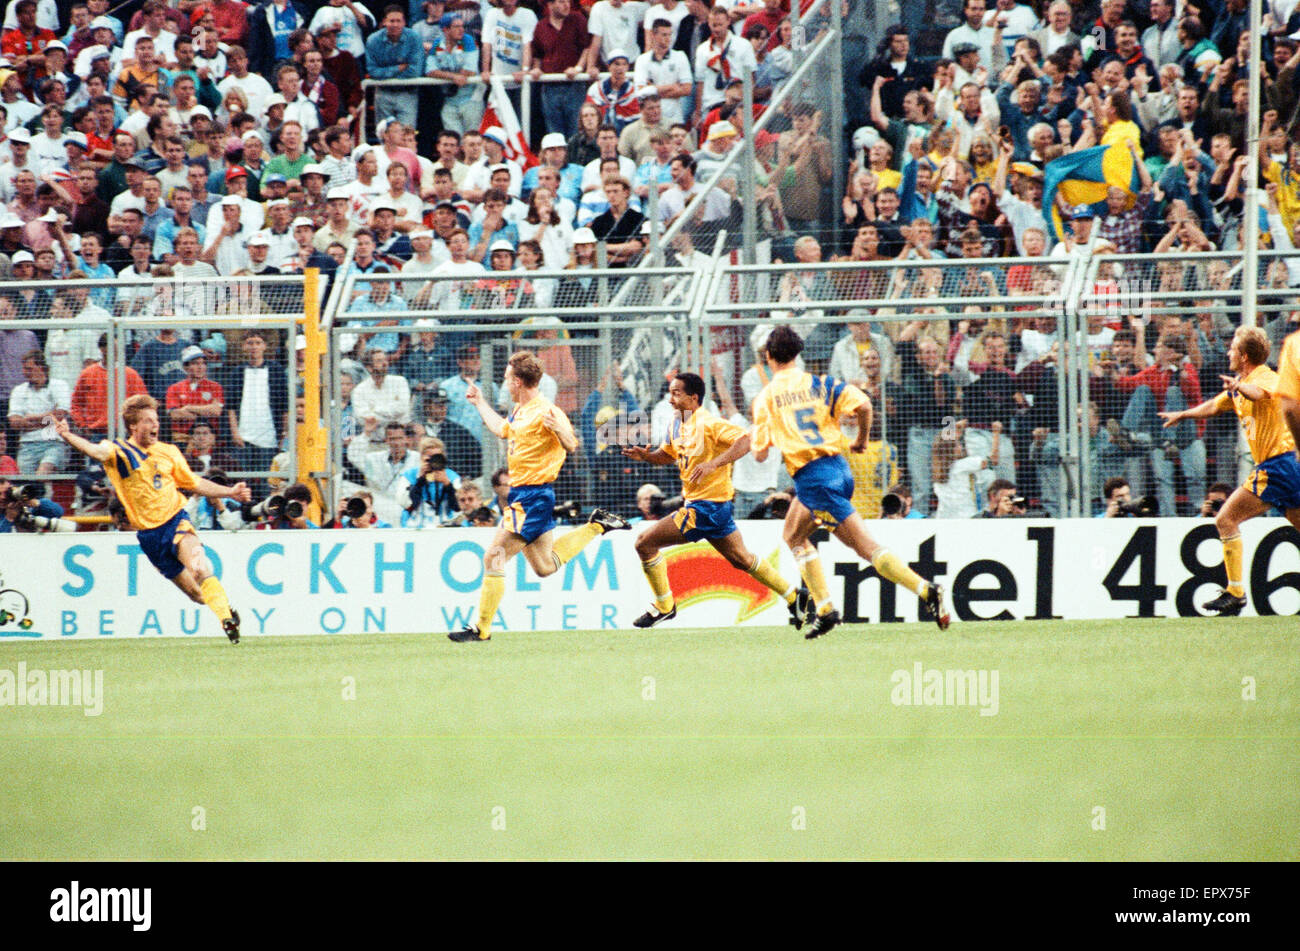 Sweden v England, European Championship Match, Group Stage, Group 1, R¿undastadion, Solna, Sweden,  17th June 1992. Goal.   Final score: Sweden 2-1 England Stock Photo